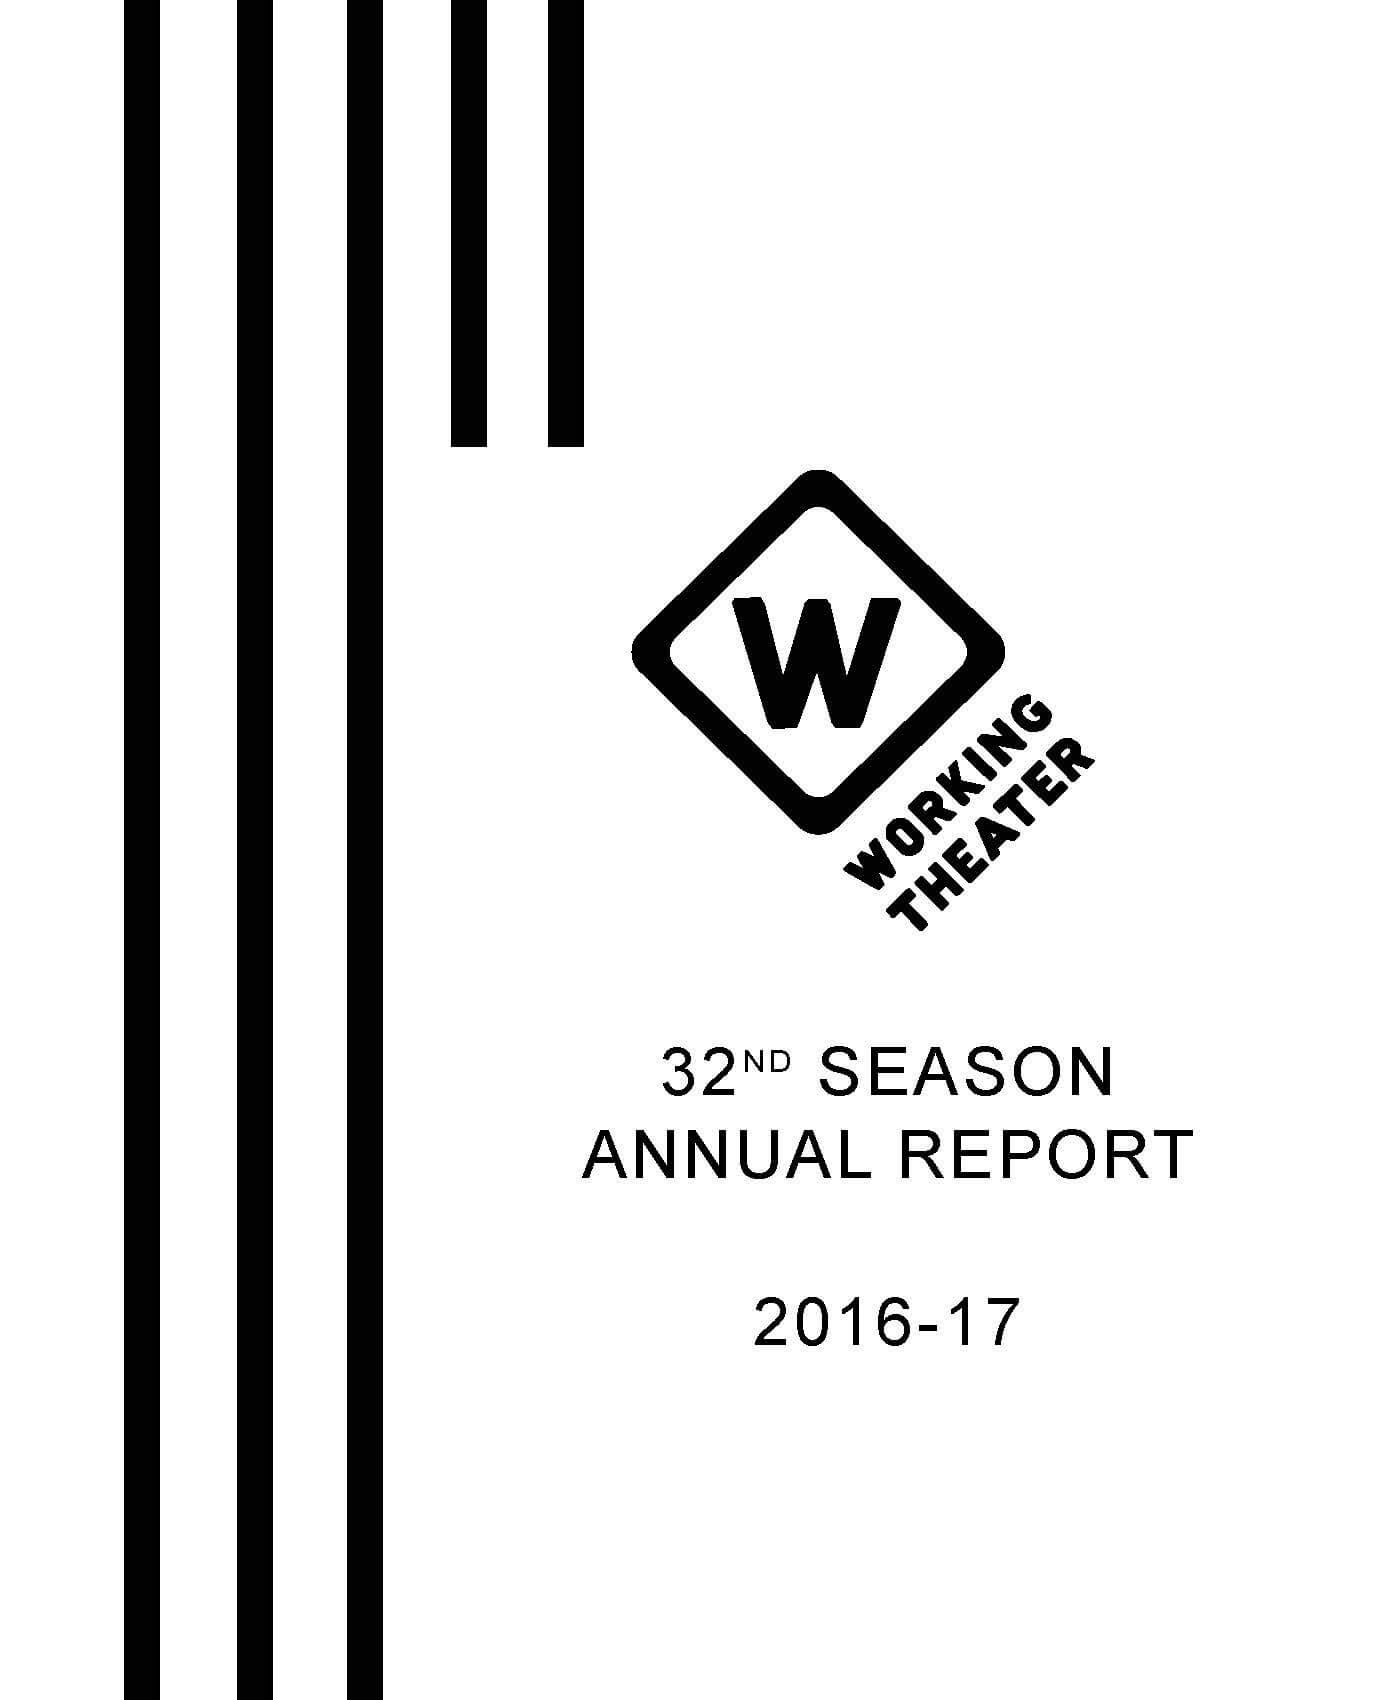 32nd season annual report 